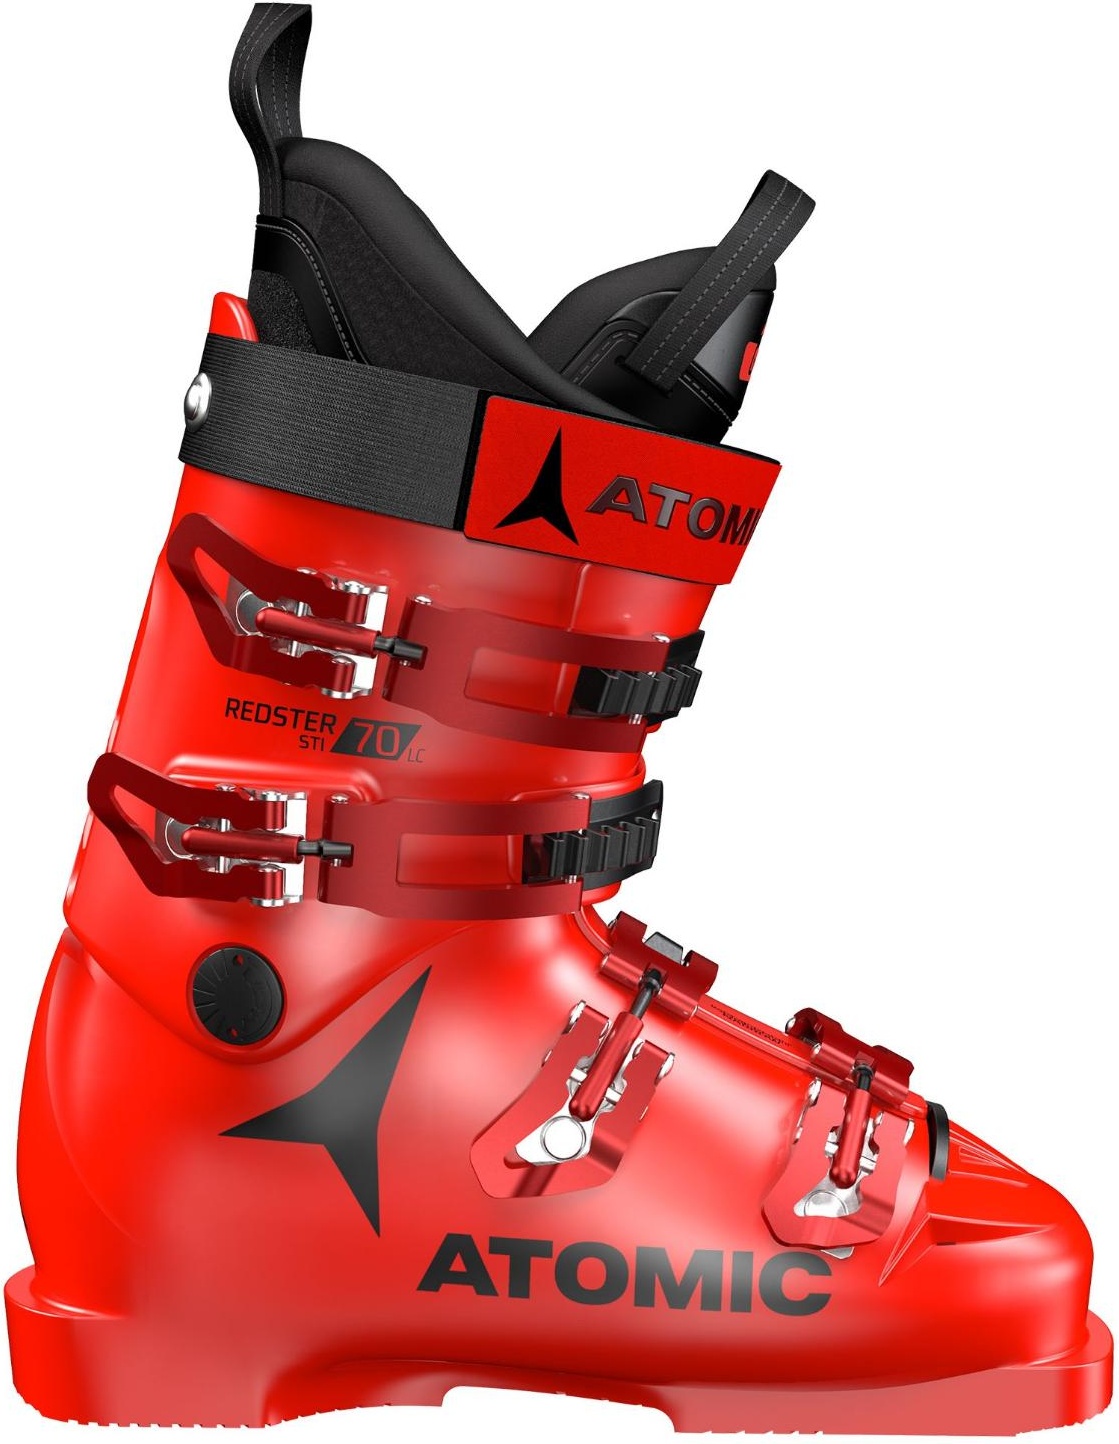 Горнолыжные ботинки Atomic Redster Sti 70 2021, red/black, 23